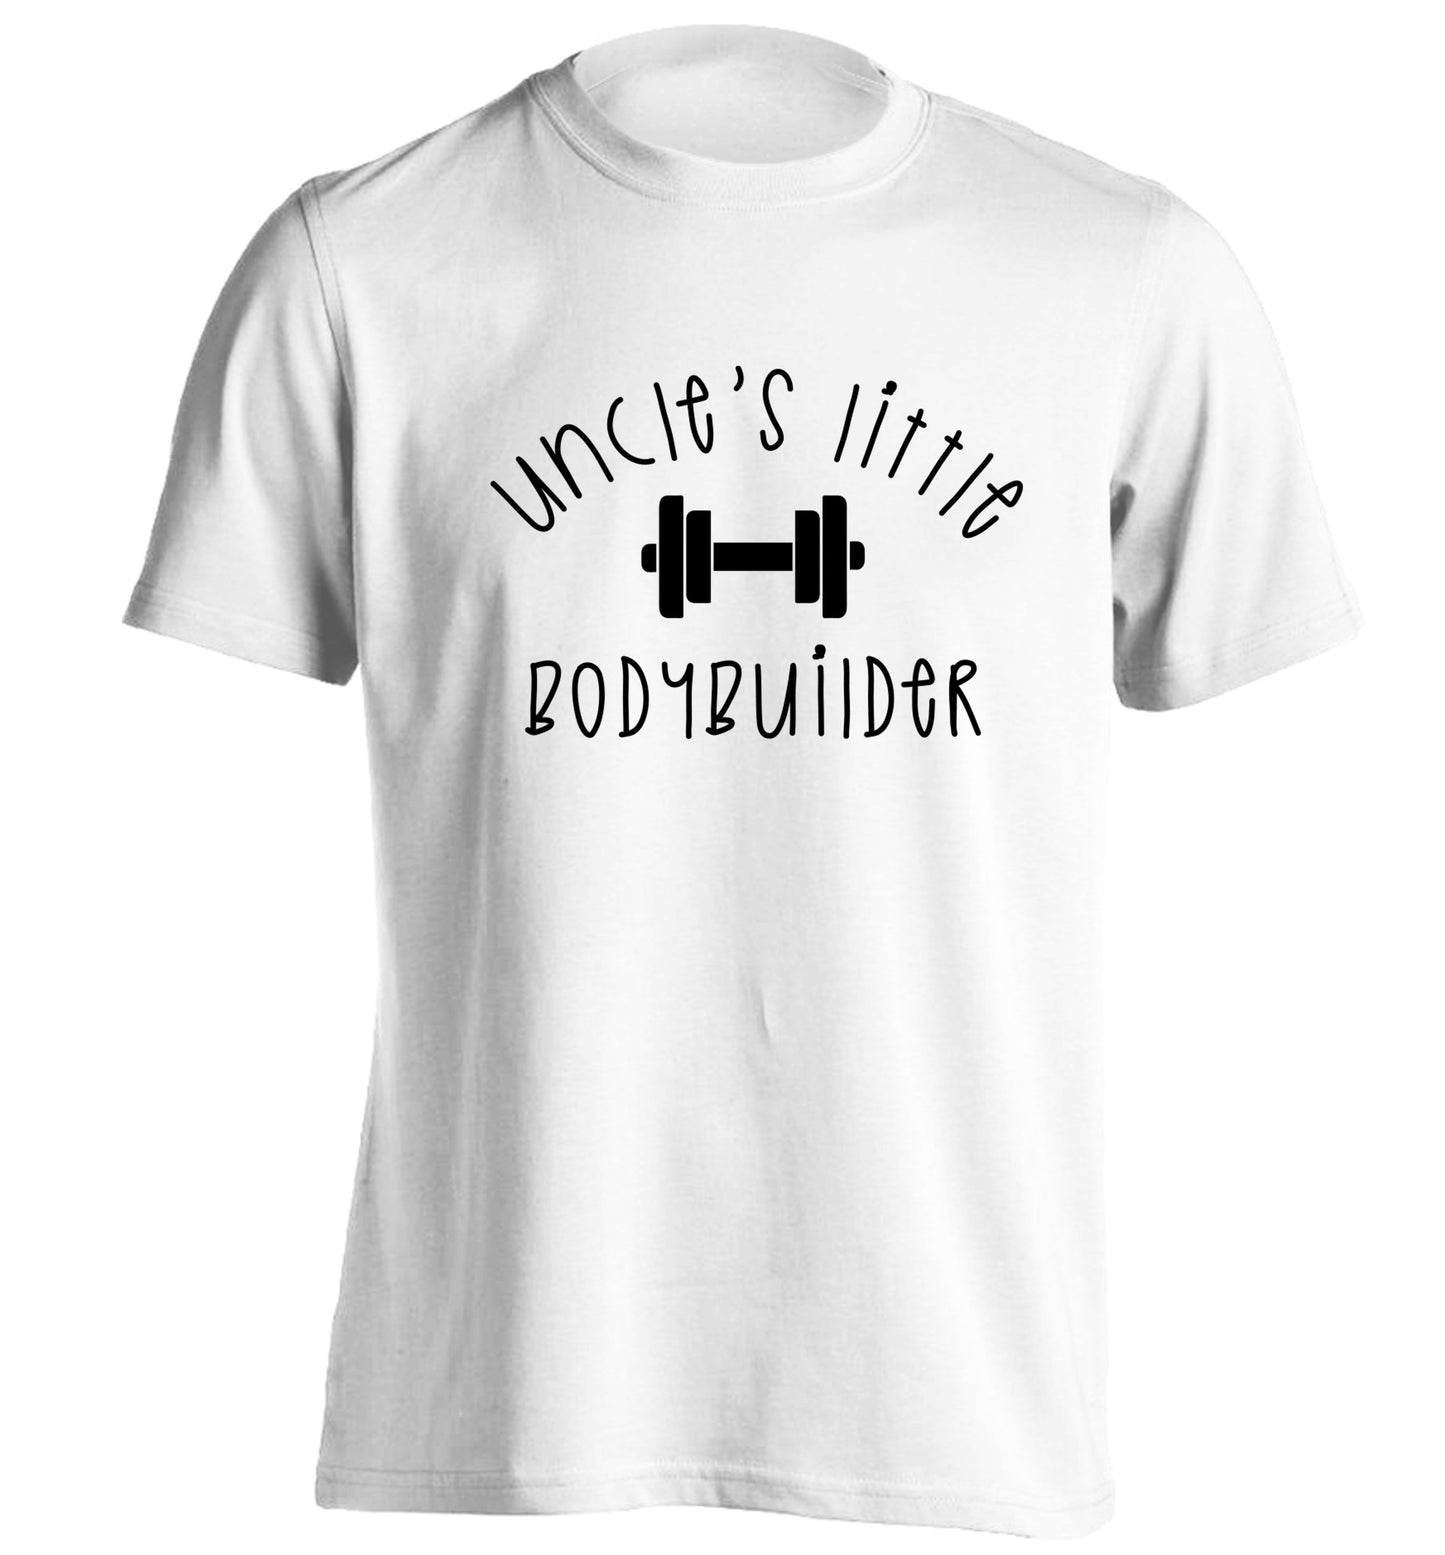 Uncle's little bodybuilder adults unisex white Tshirt 2XL